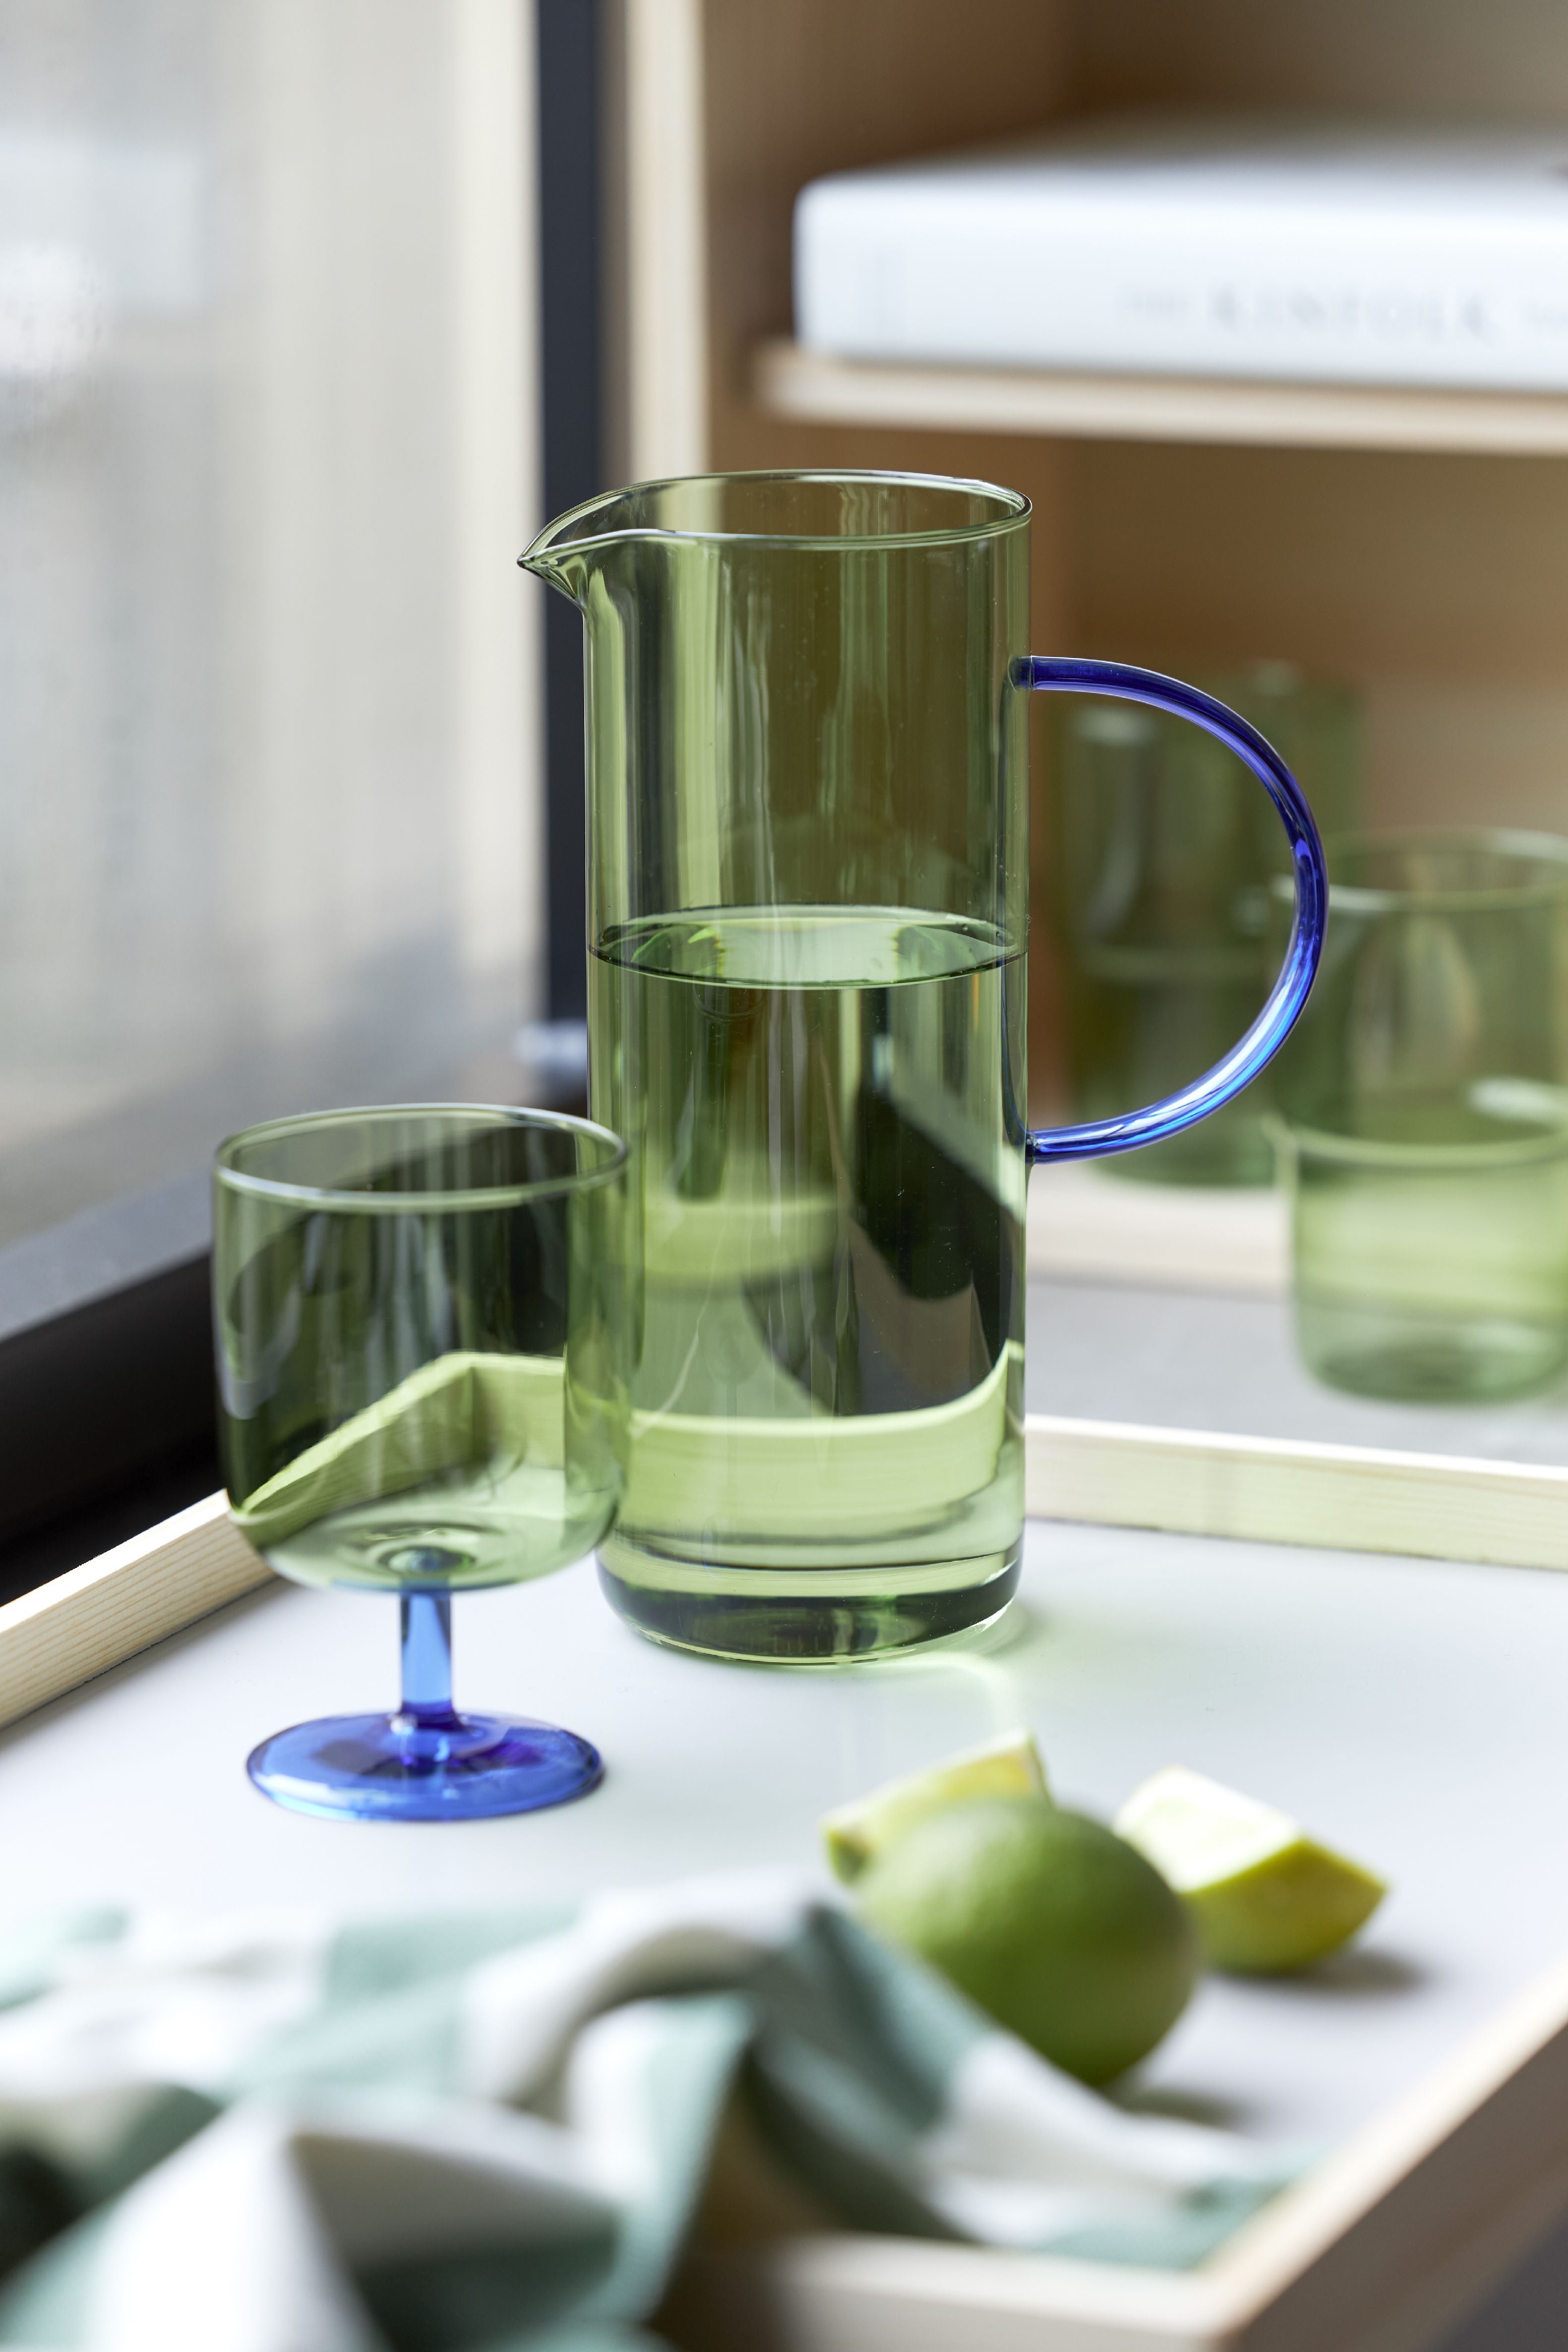 Lyngby Glas Torino Glass Jug 1,1 L, Green/Blue